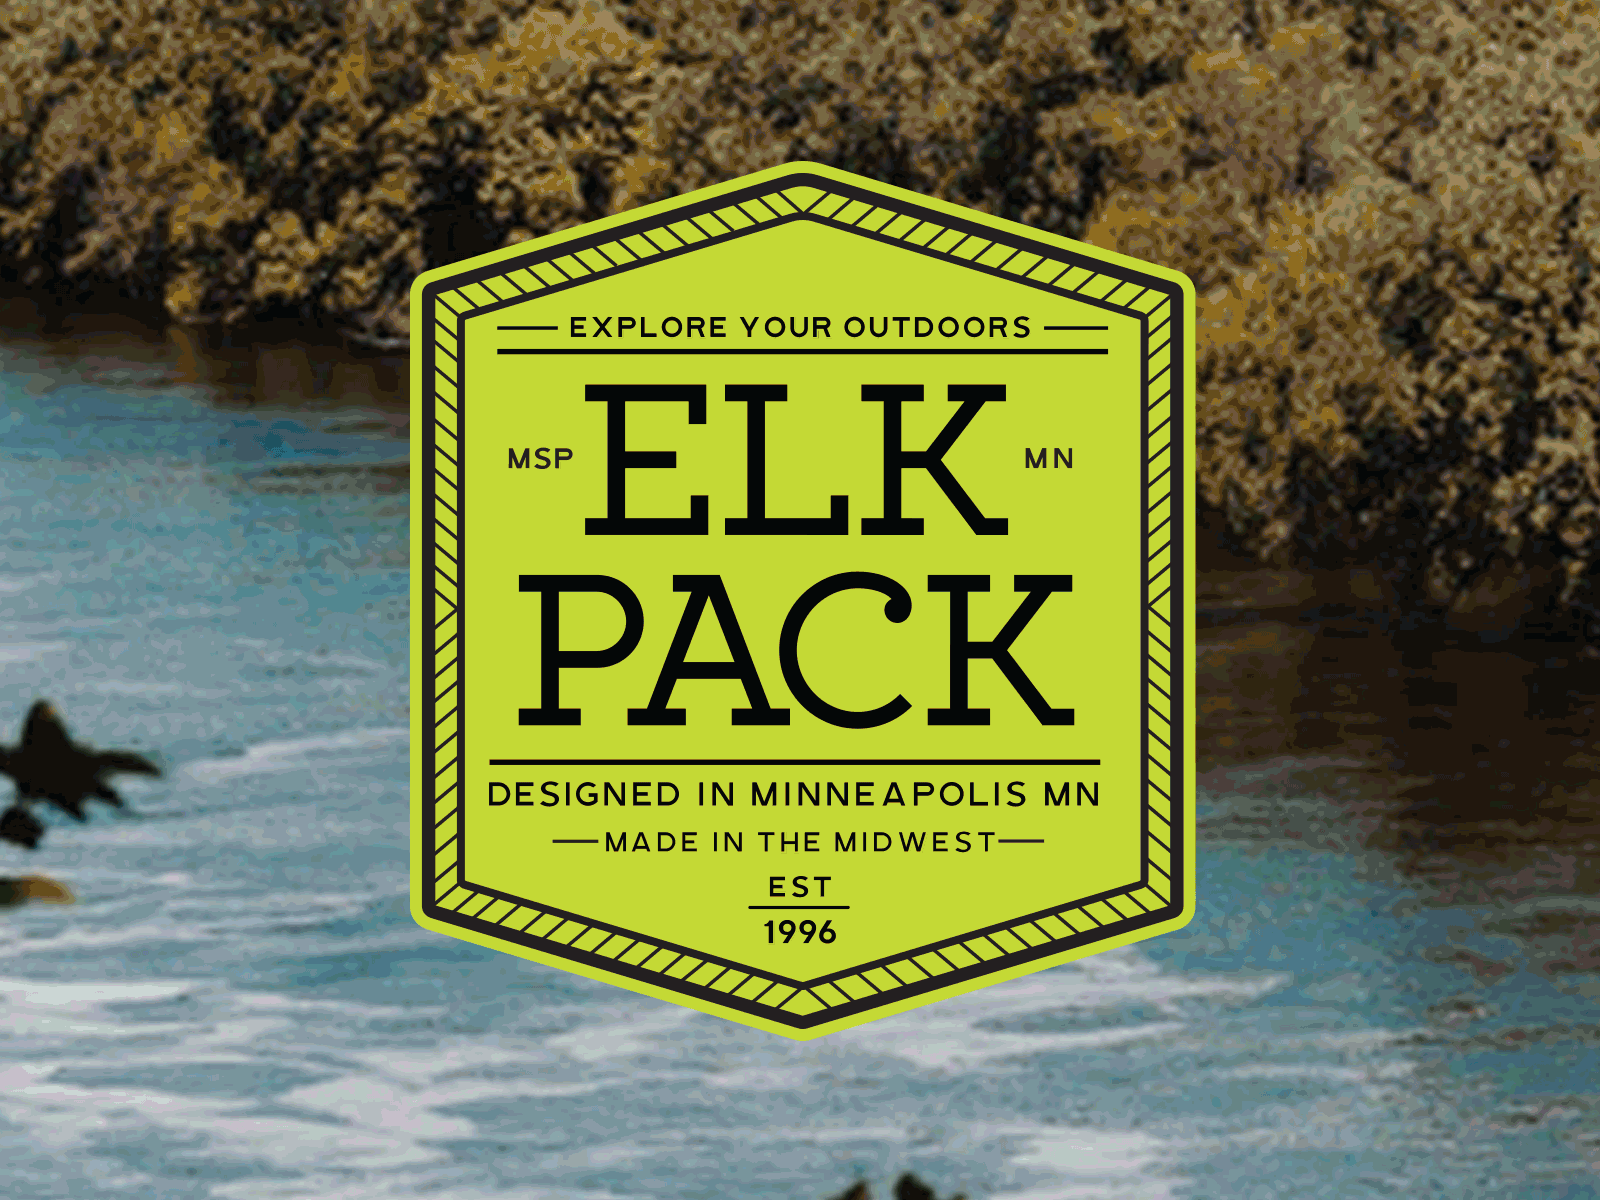 Elk Pack logo